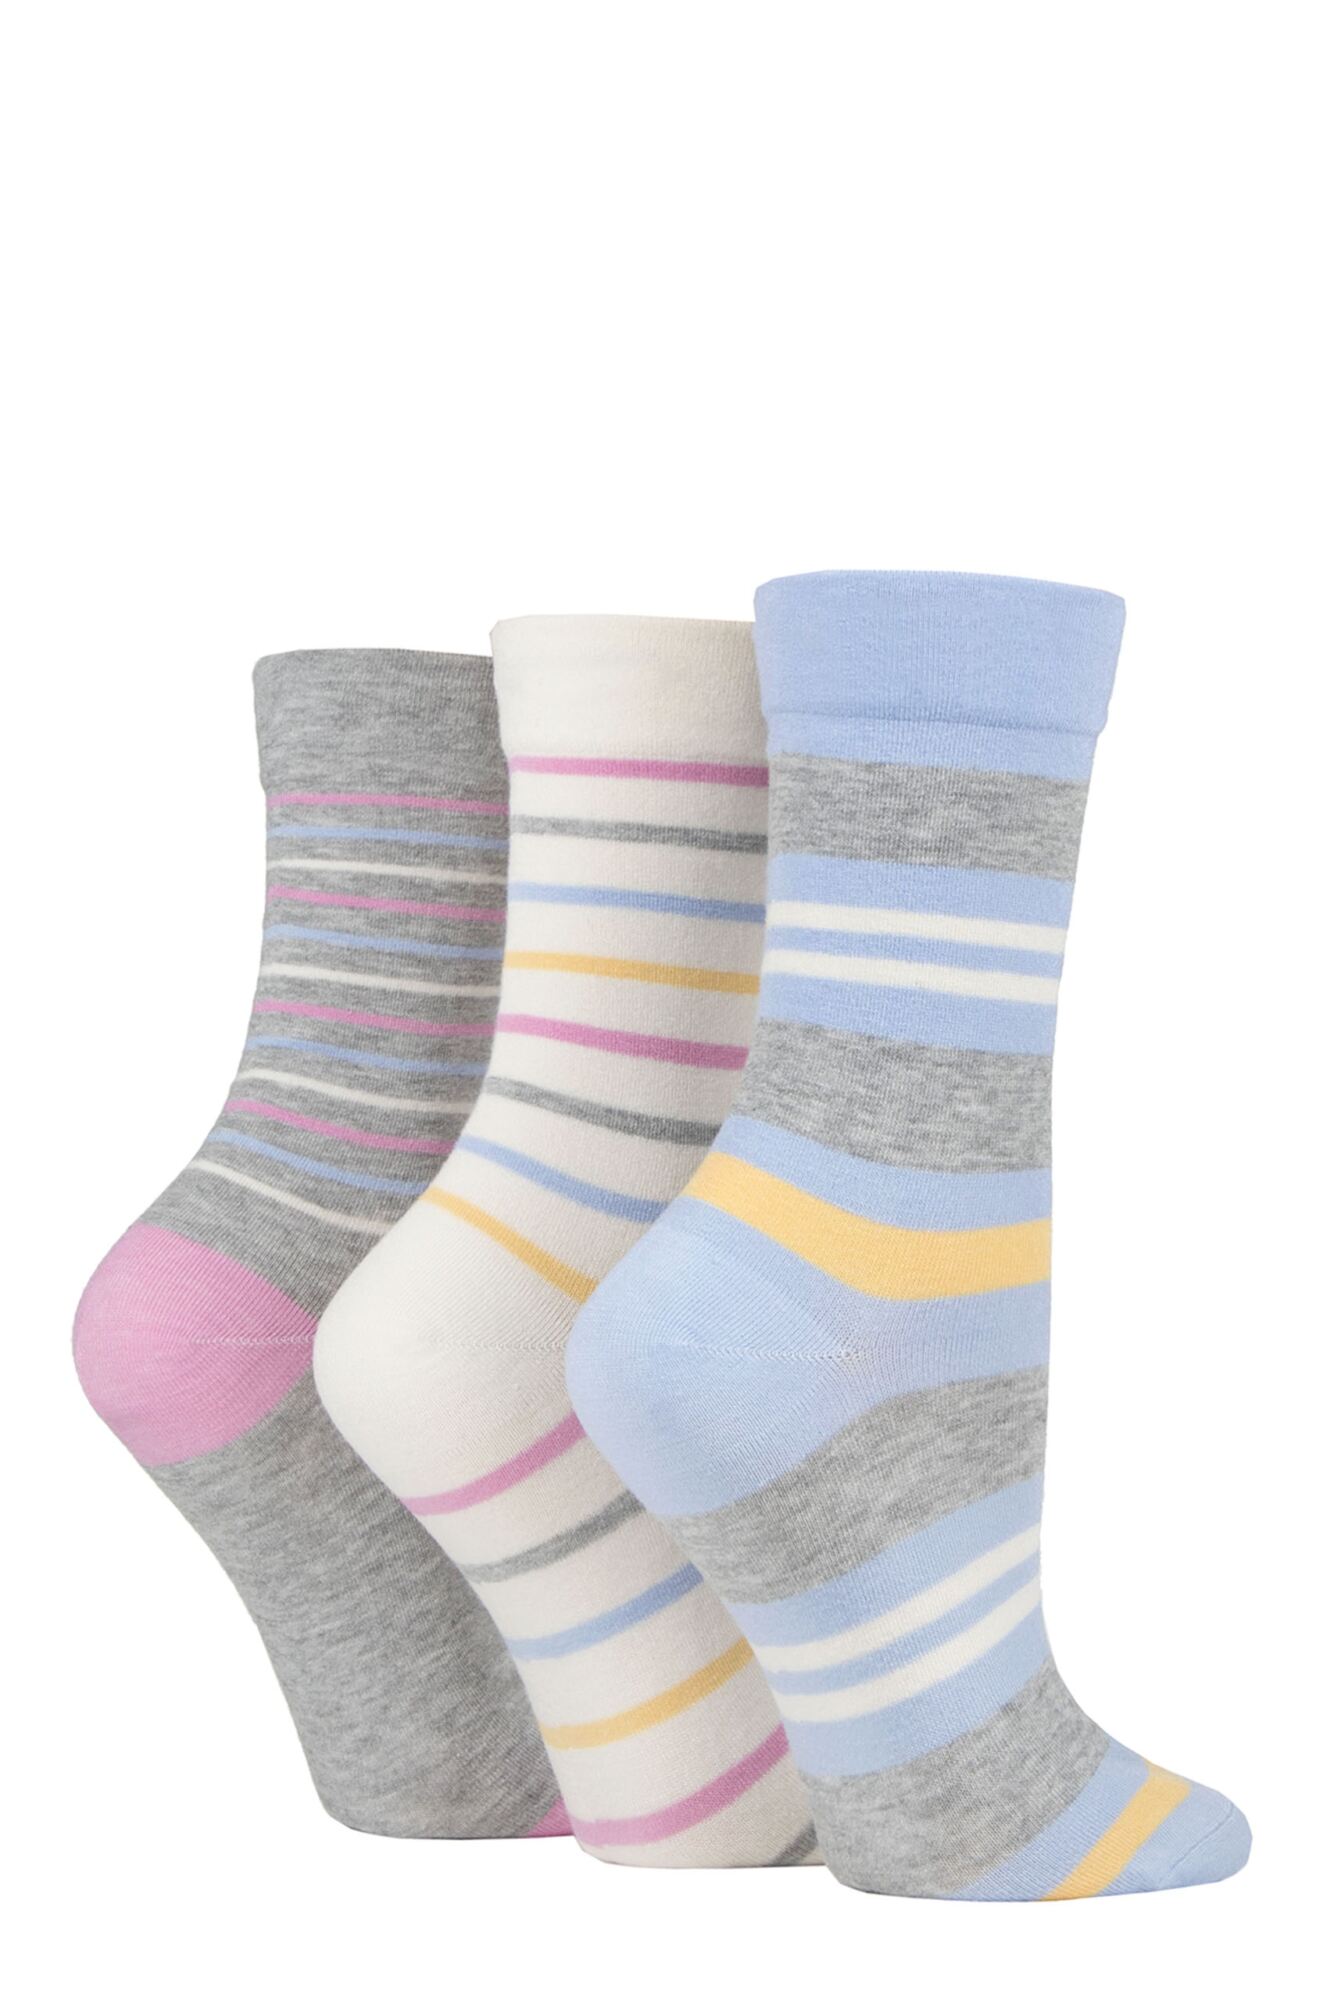 3 Pair Gentle Bamboo Socks with Smooth Toe Seams in Plains and Stripes Ladies - SOCKSHOP